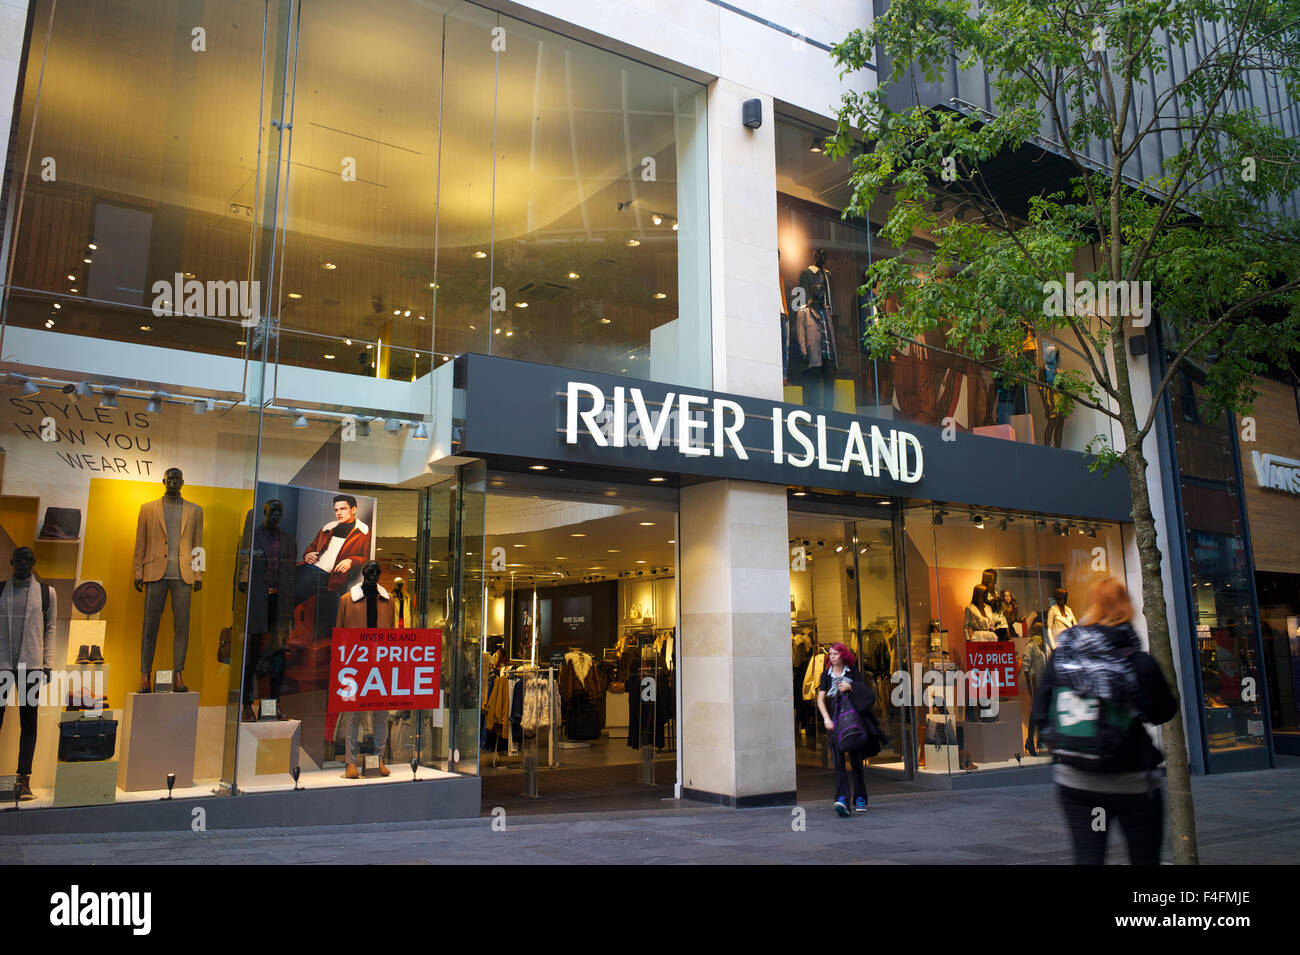 River Island store, UK Foto de stock